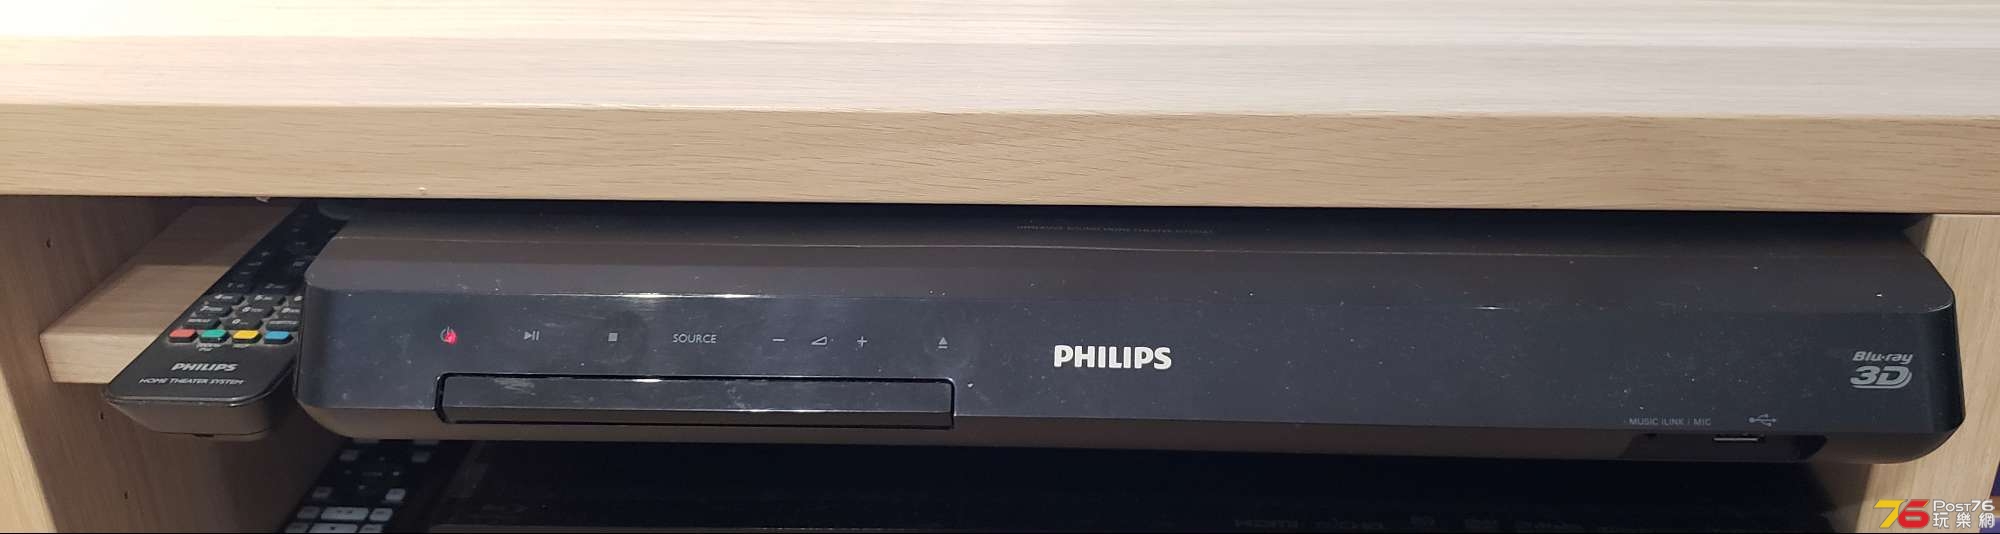 Philips 5.1 Home Theater HTS556398.jpg